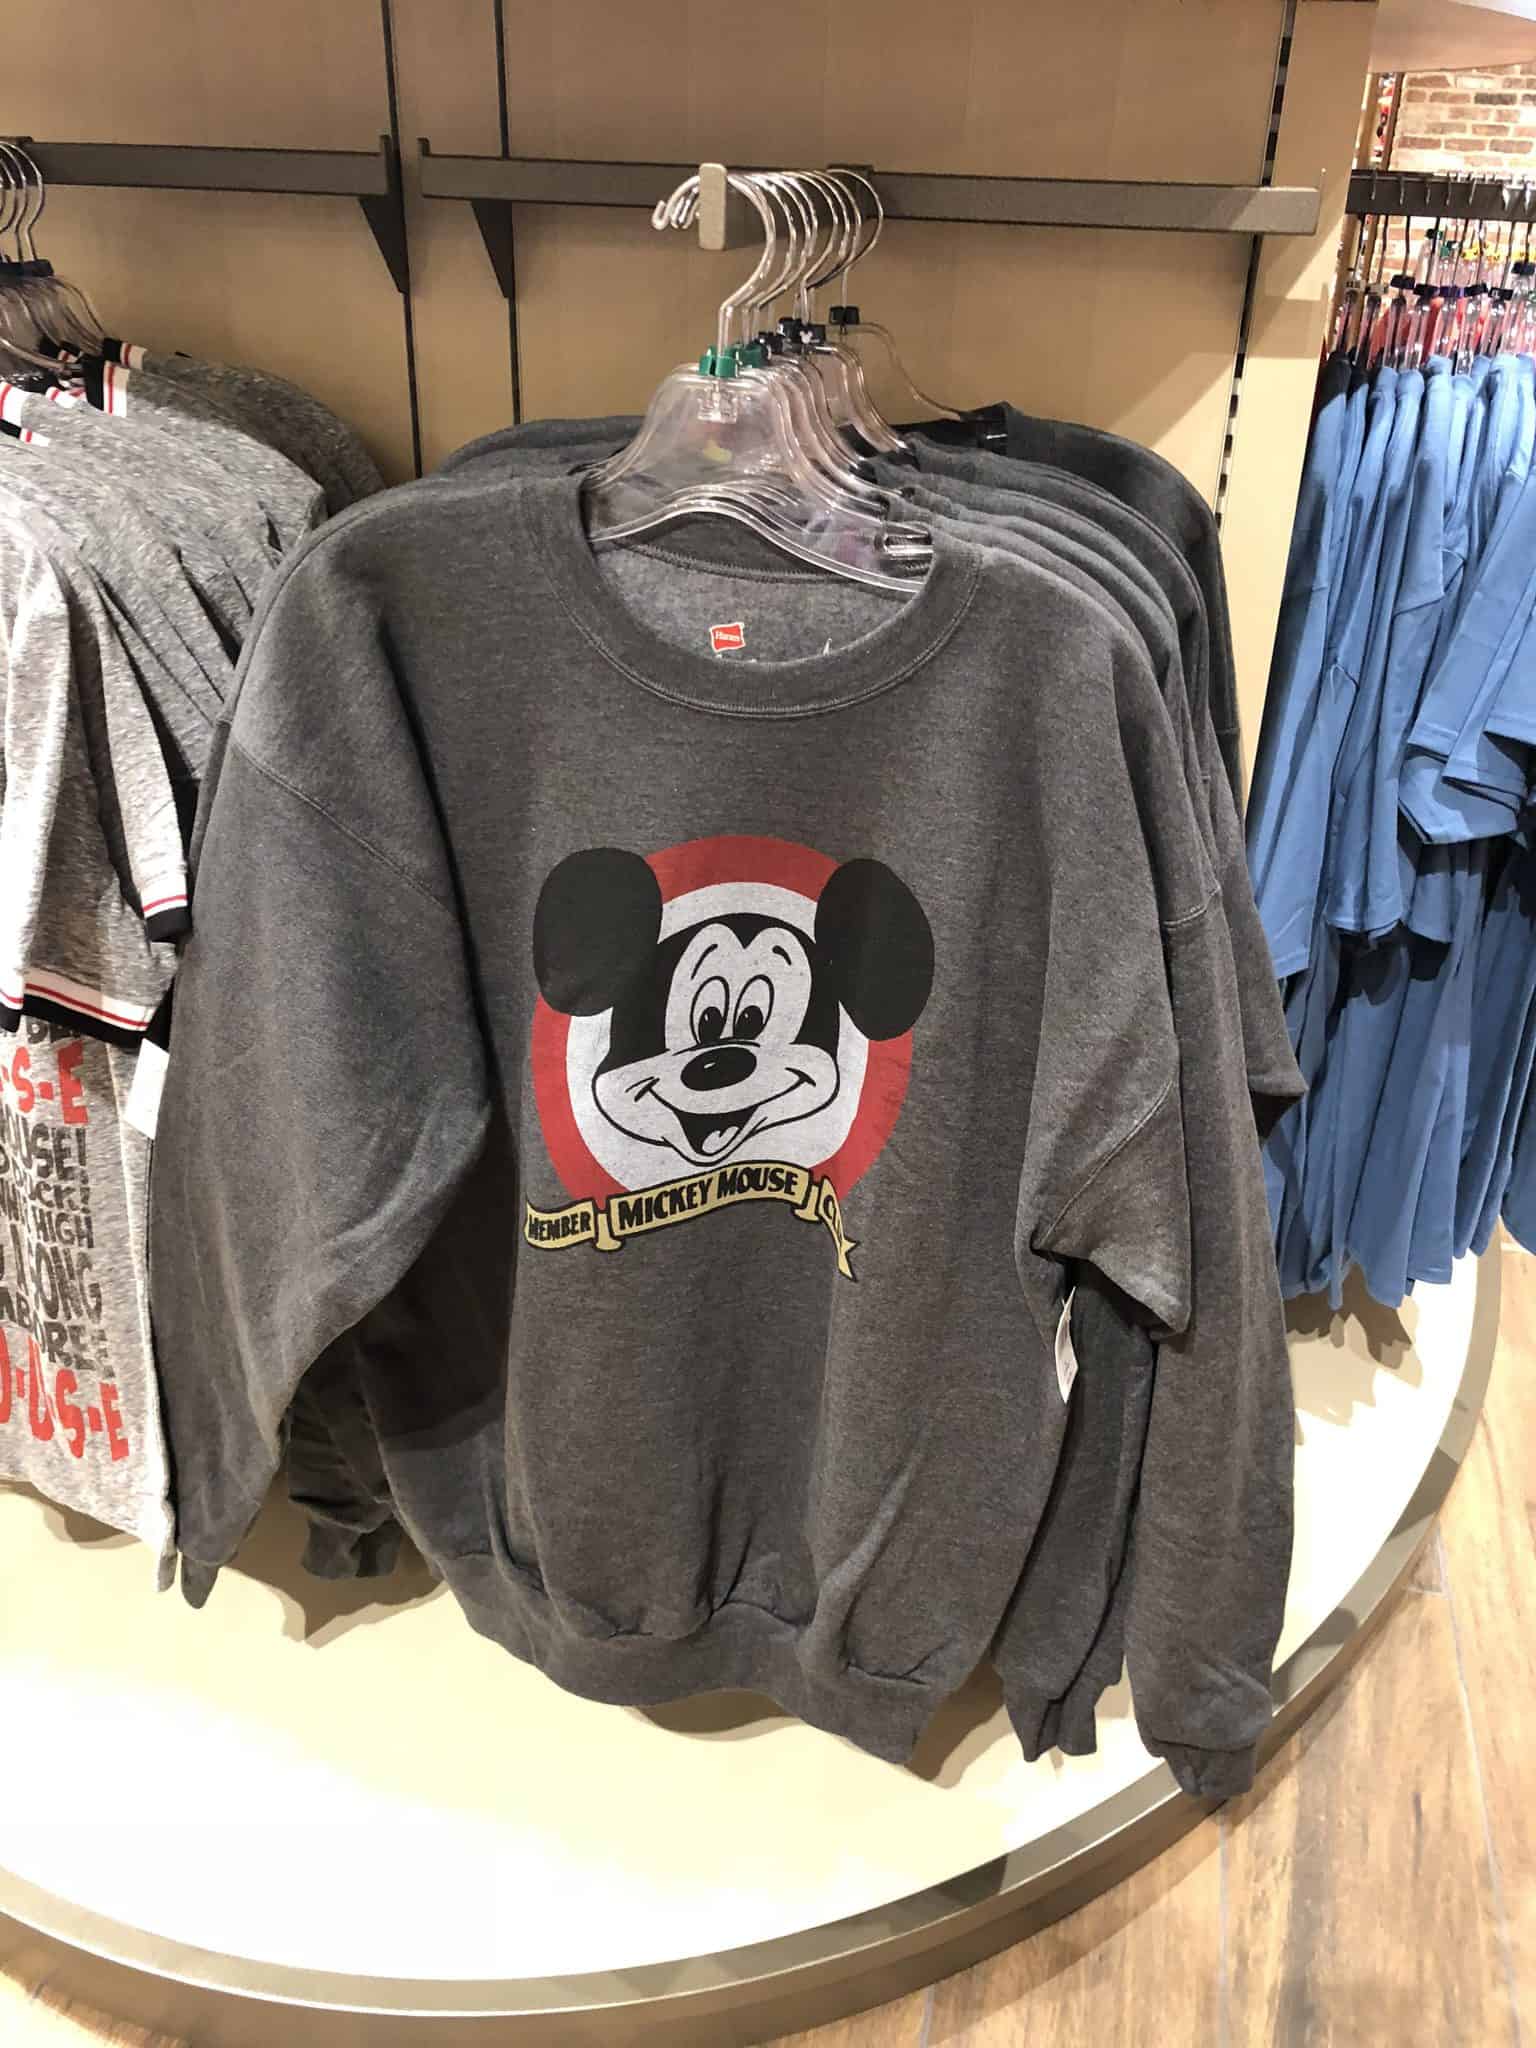 mickey mouse club sweatshirt